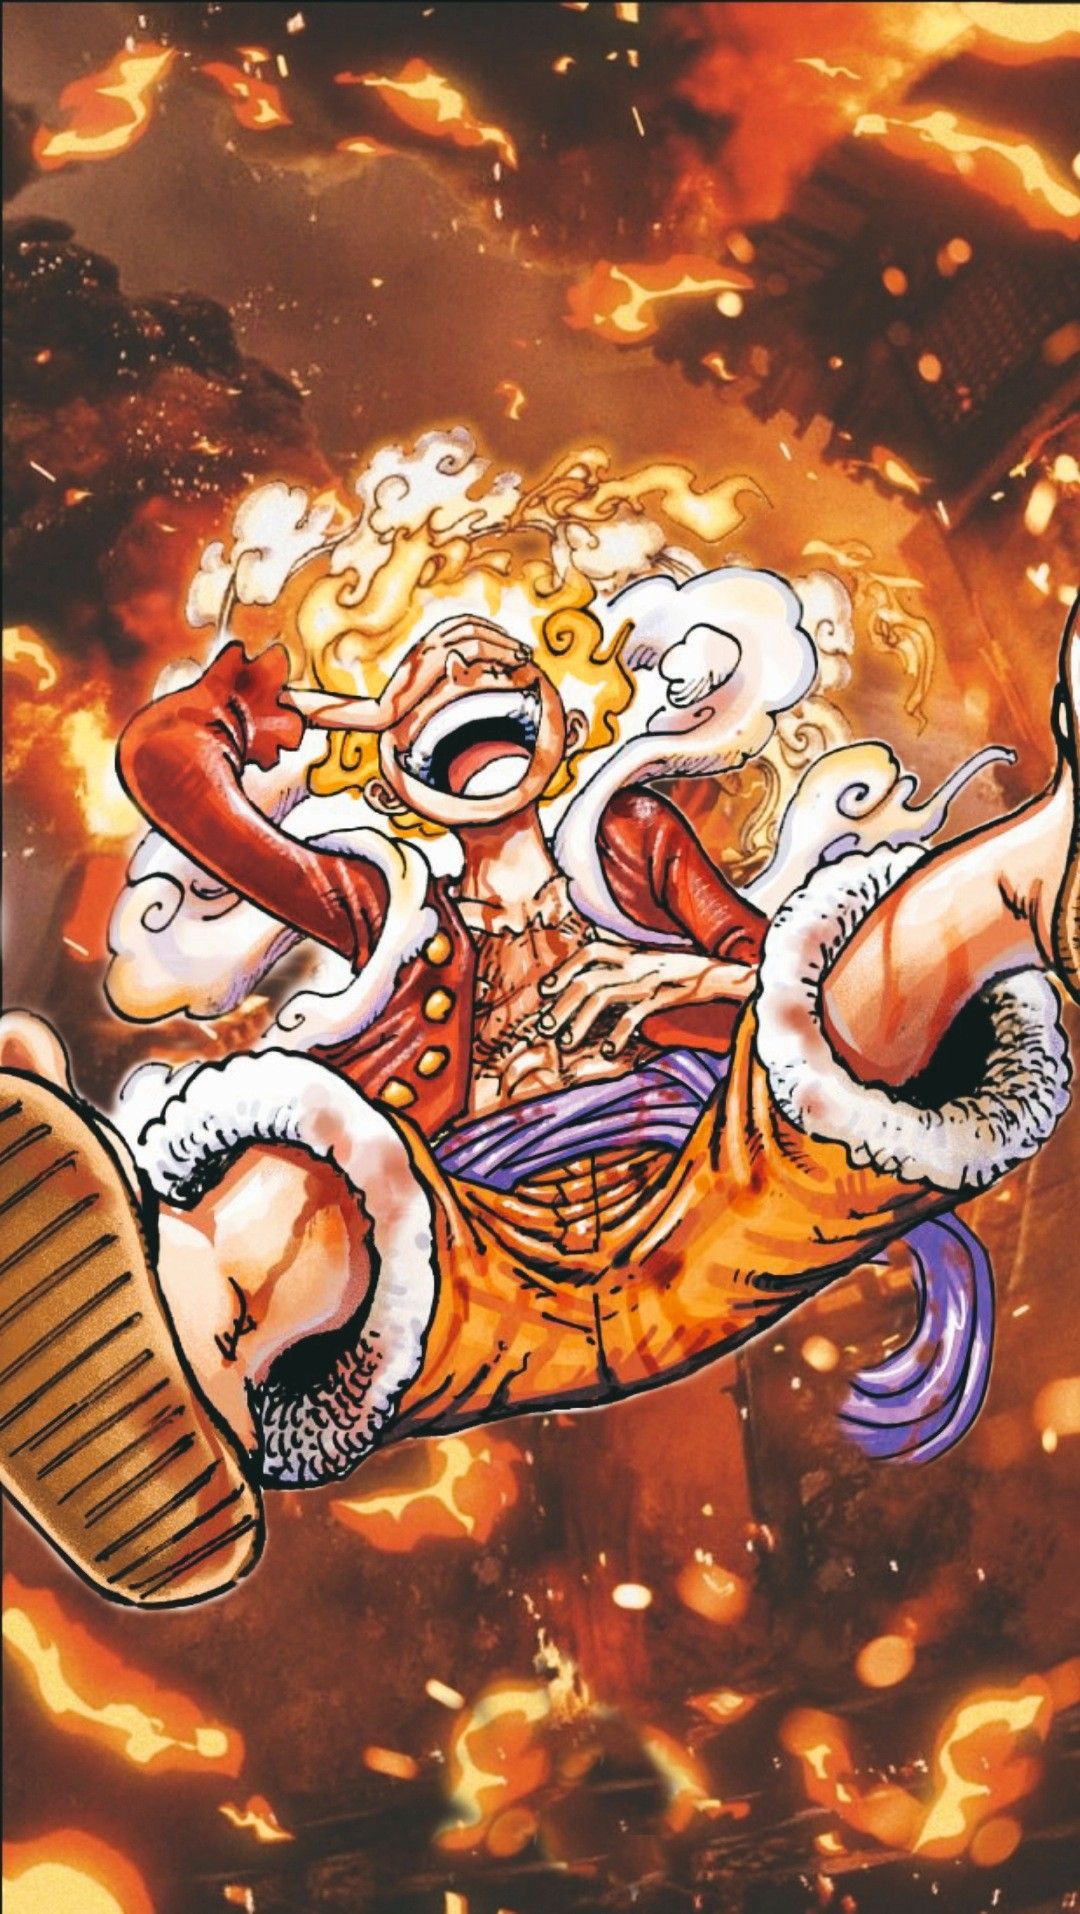 Luffy Gear 5 Sun God Nika Background. Manga anime one piece, One piece wallpaper iphone, One piece drawing